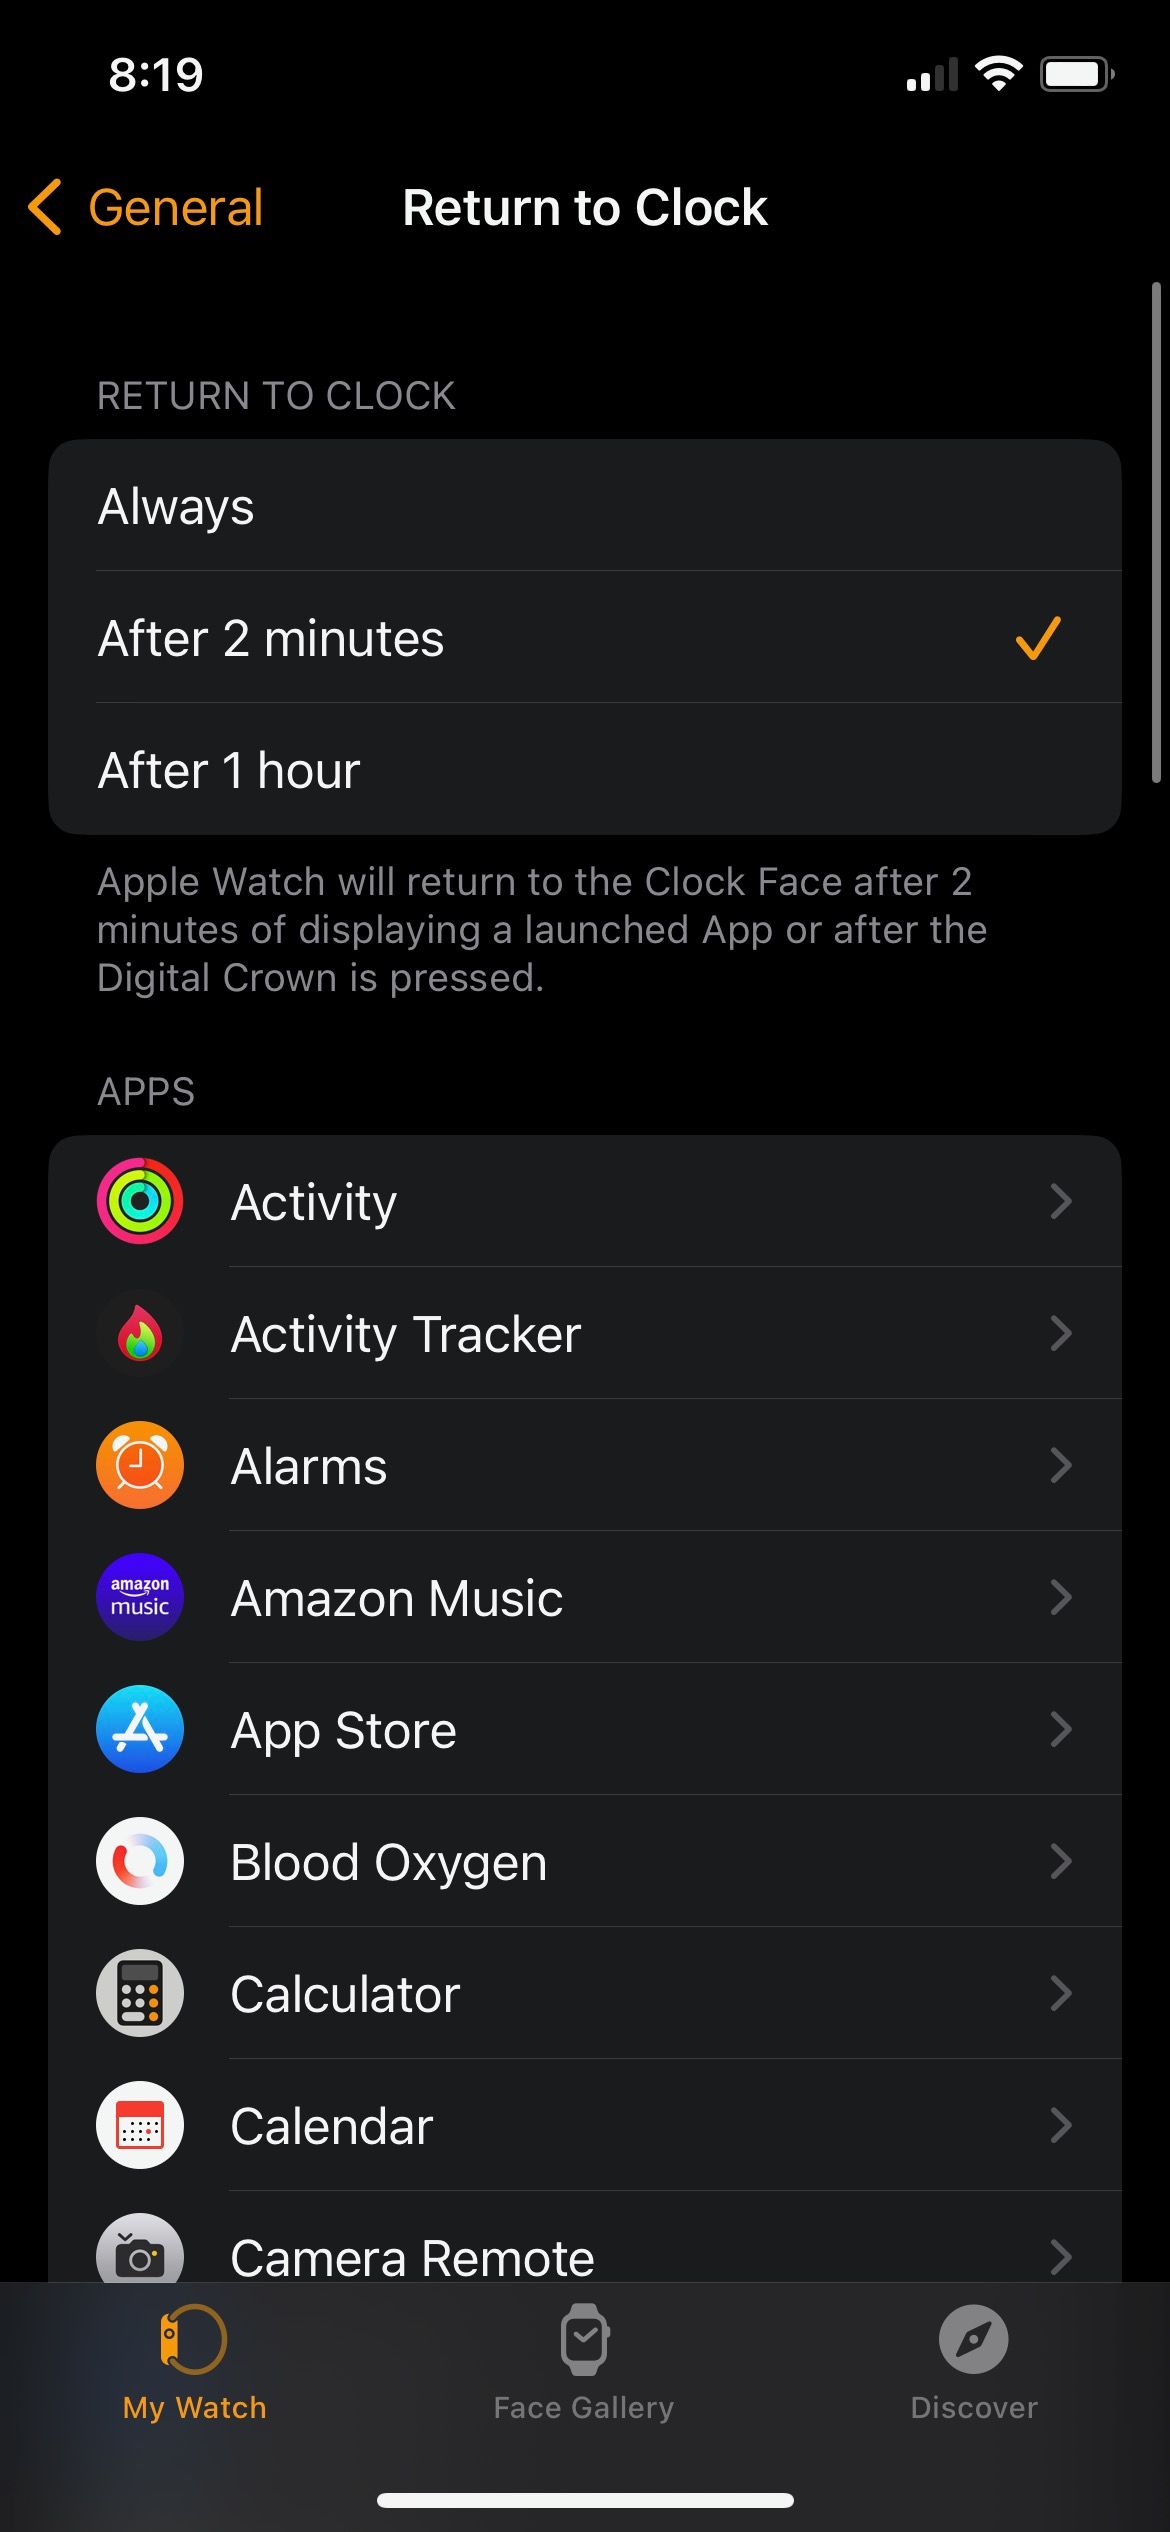 Return to Clock settings iPhone